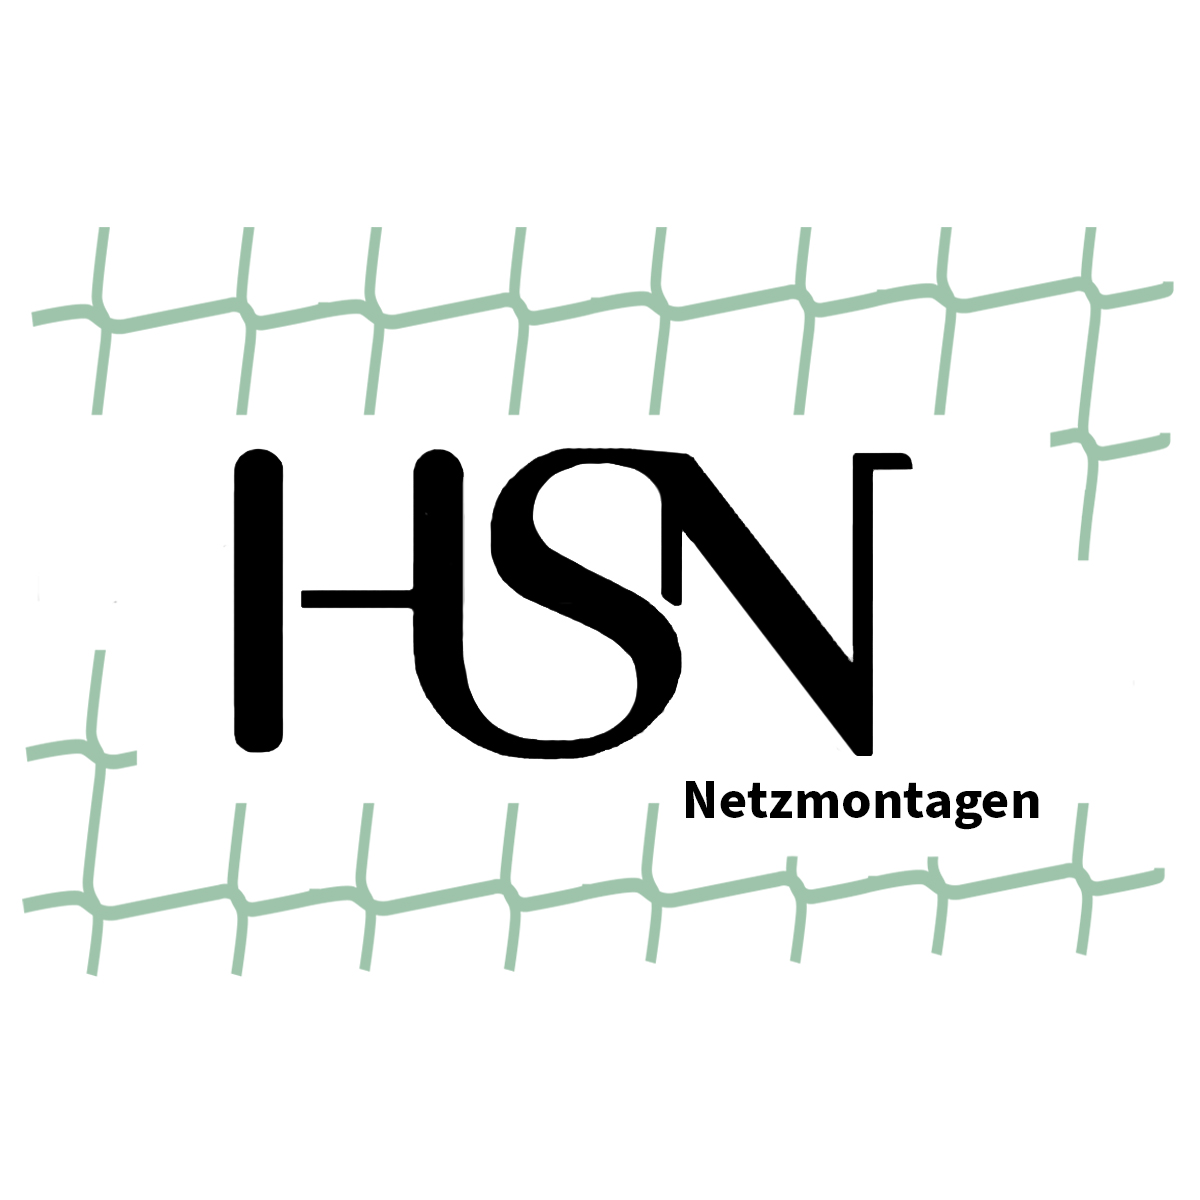 Henke & Schwarz Netzmontagen logo